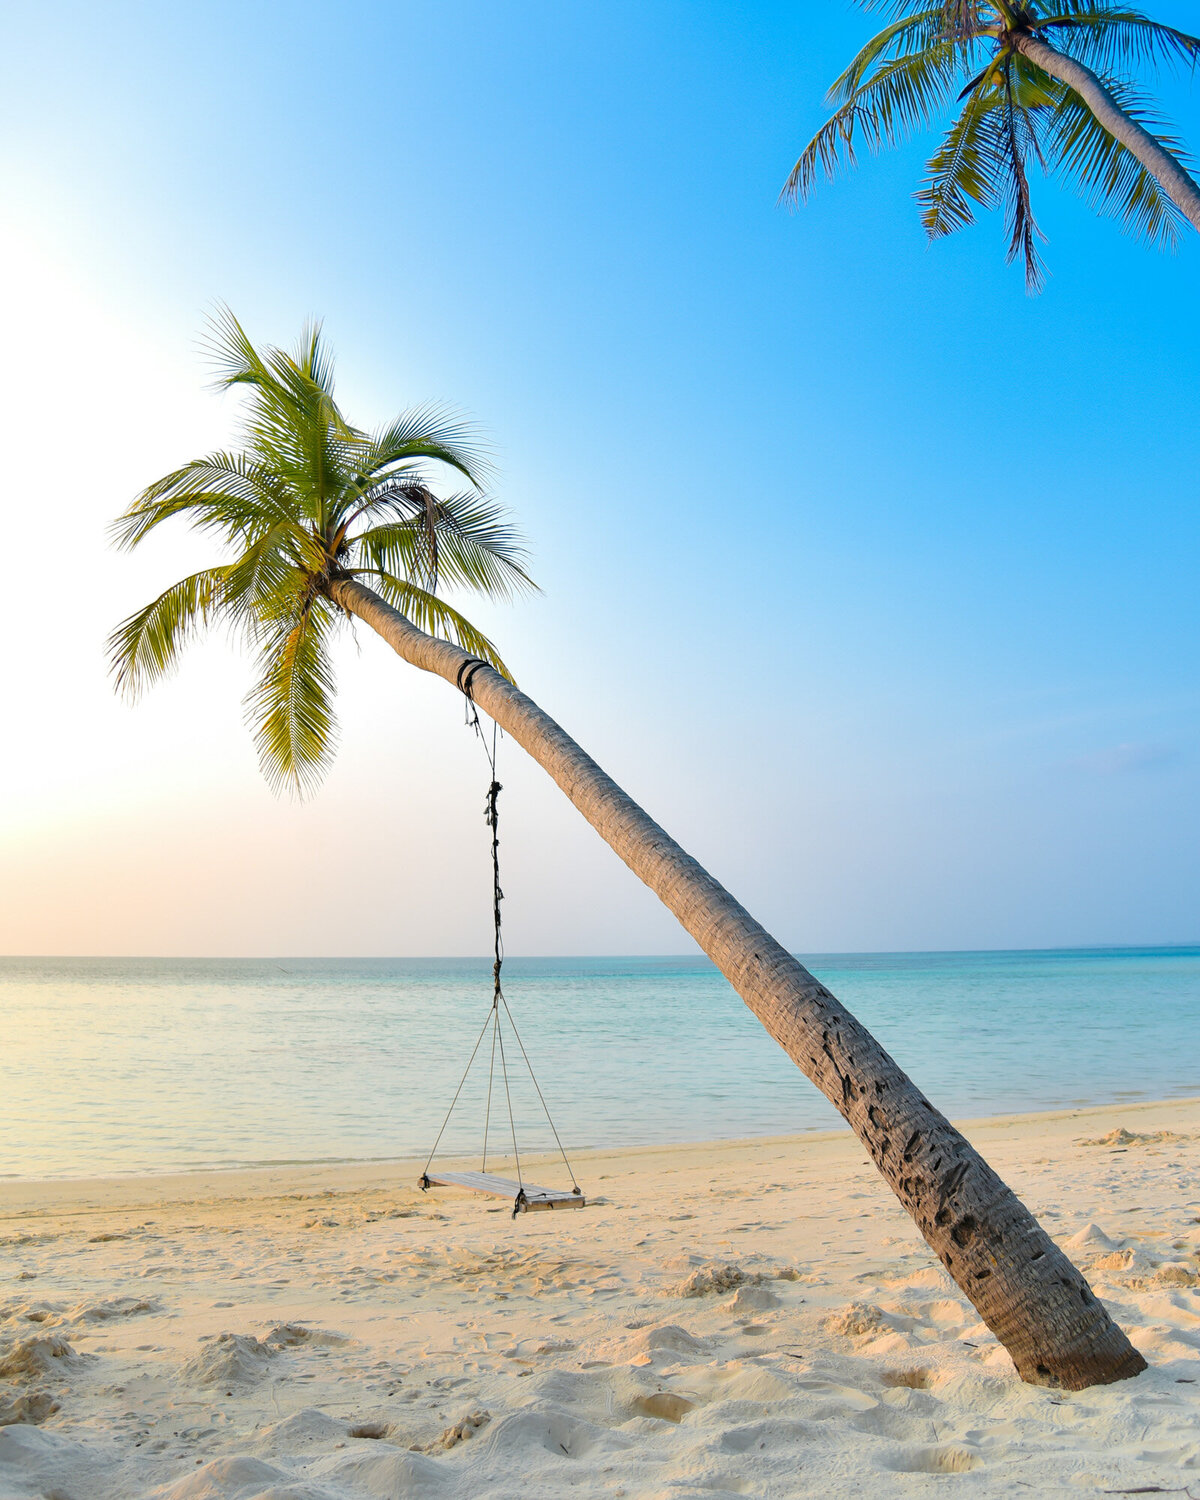 Coconut tree with hammock hanged beside the seashore